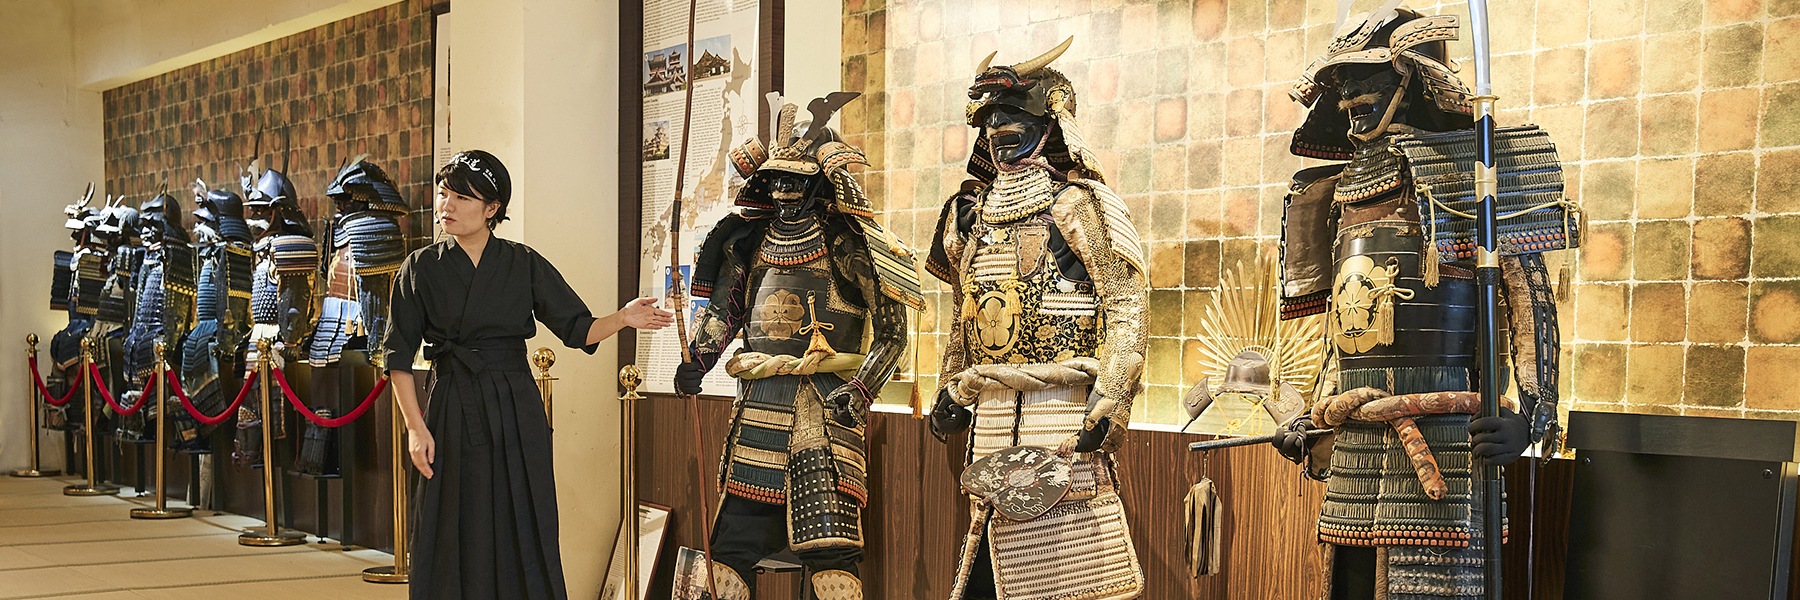 Samurai Museum Kyoto